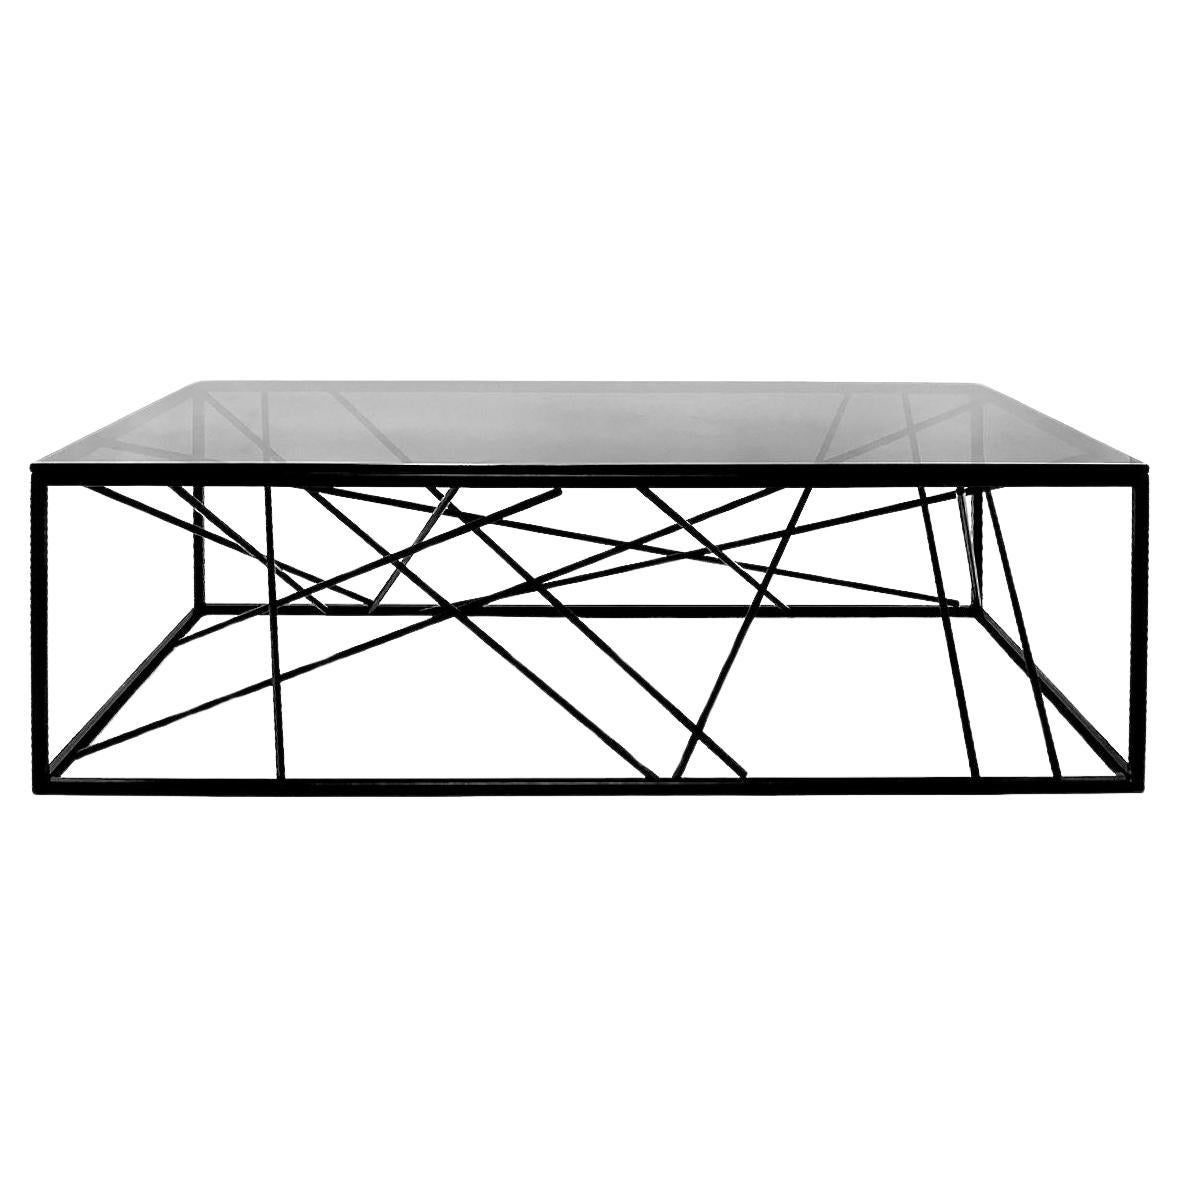 Nest Coffee Table by Morgan Clayhall, sculptural, steel, glass, custom